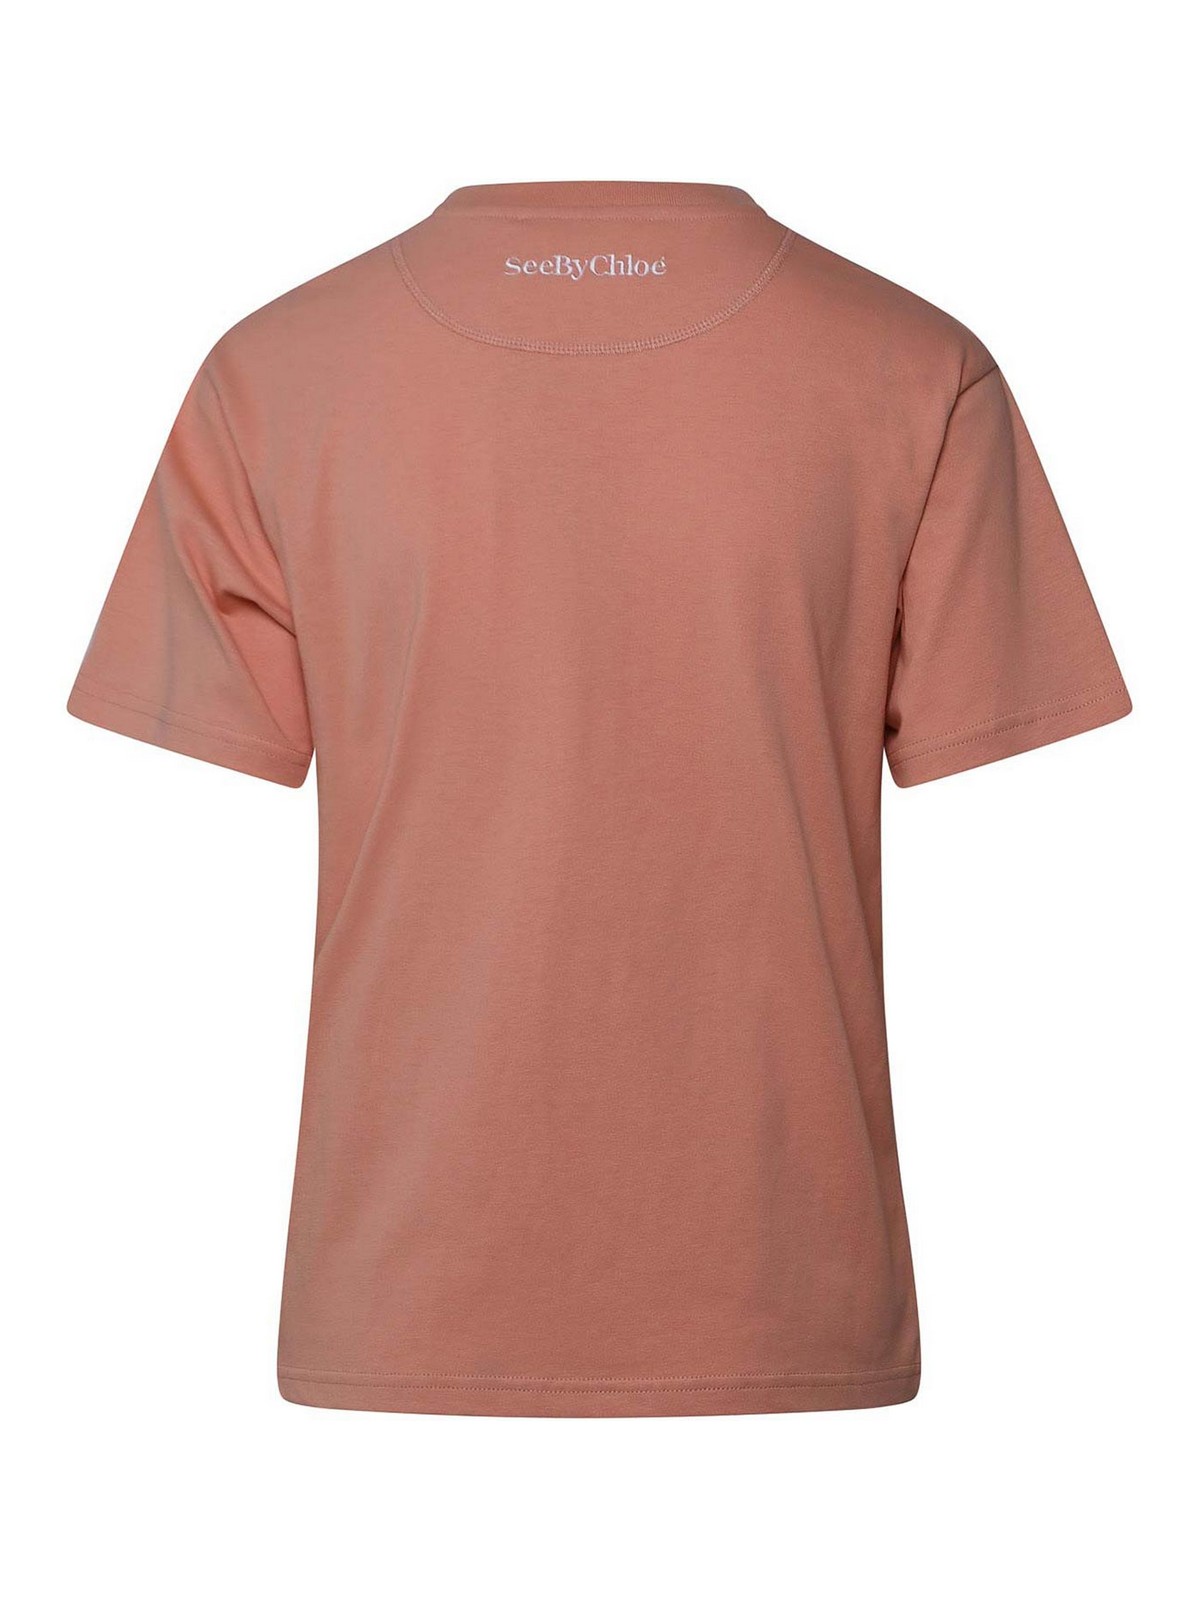 Camisetas See by Chloé - Camiseta - Color Carne Y Neutral - S23SJH231126T7